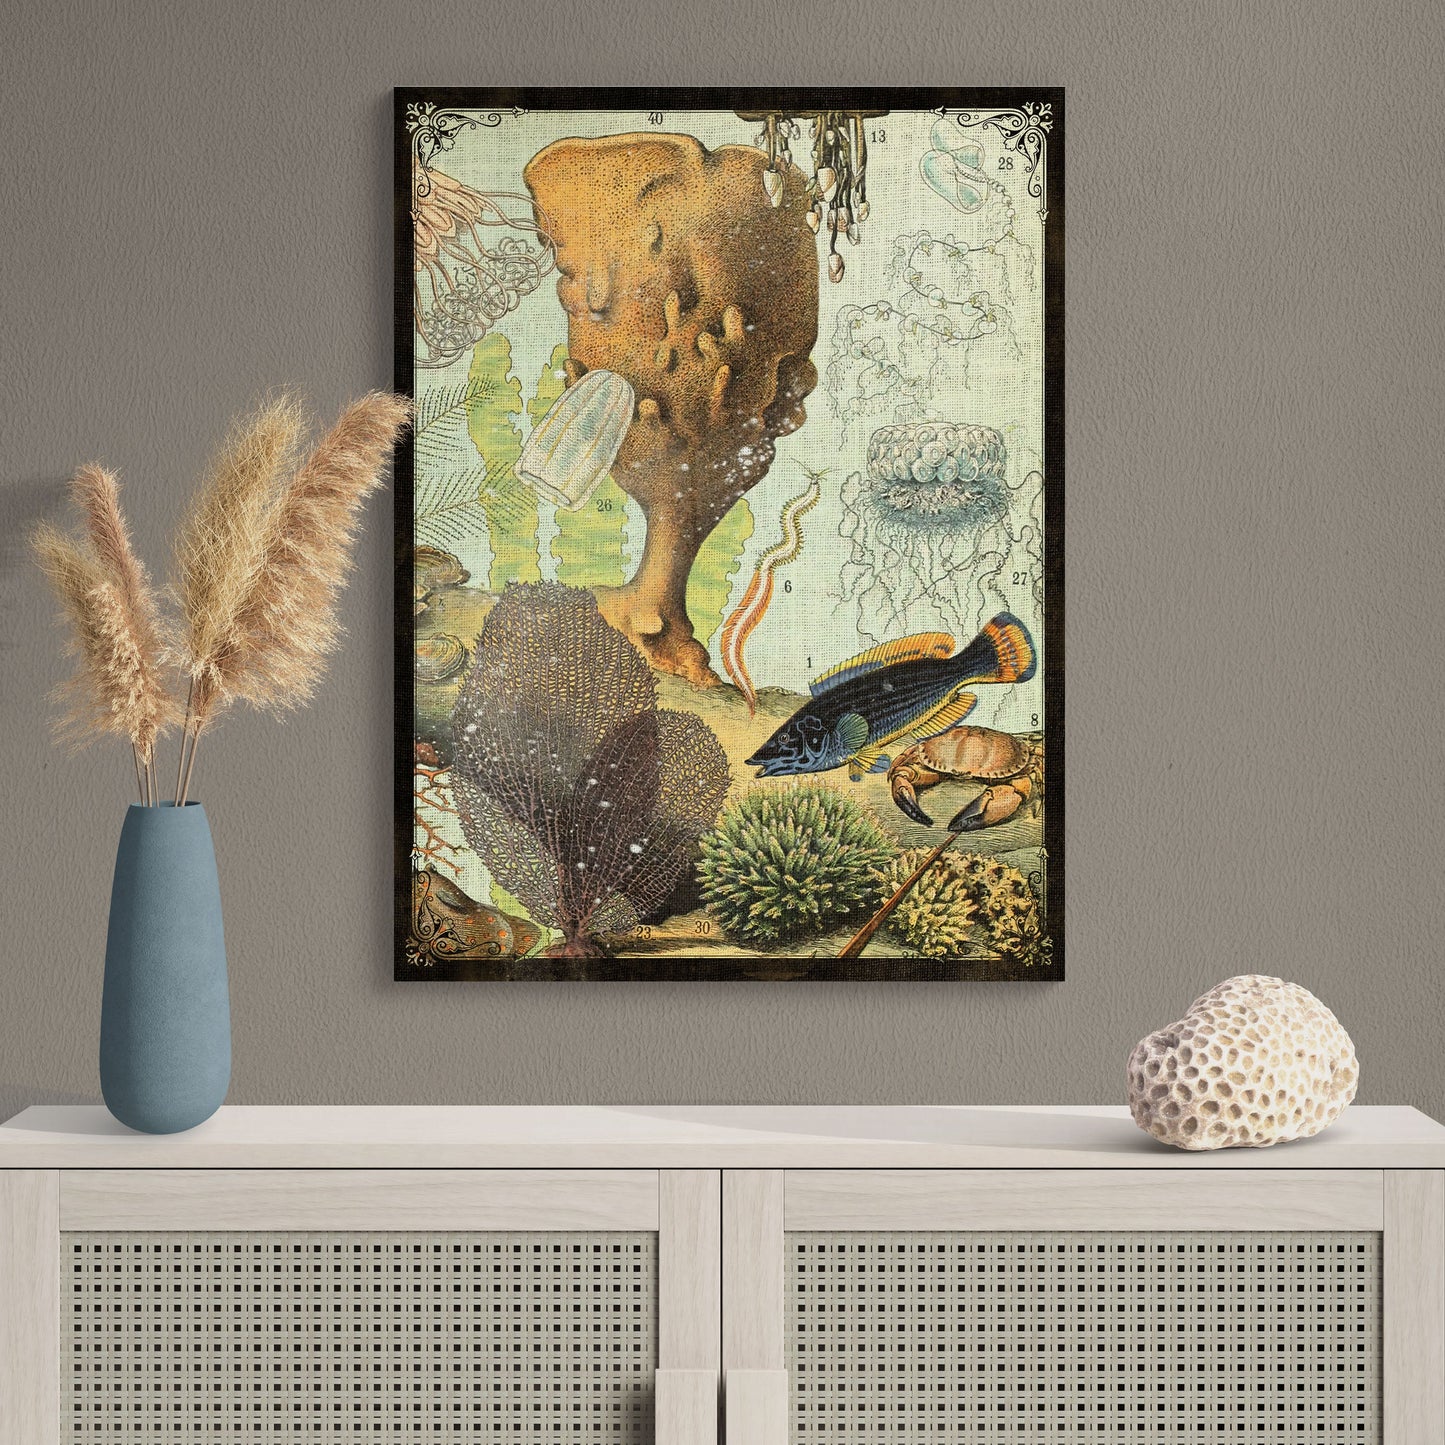 Sea Life Underwater Scene 3D Natural History Illustration Ocean Wall Art - Retro Reverence